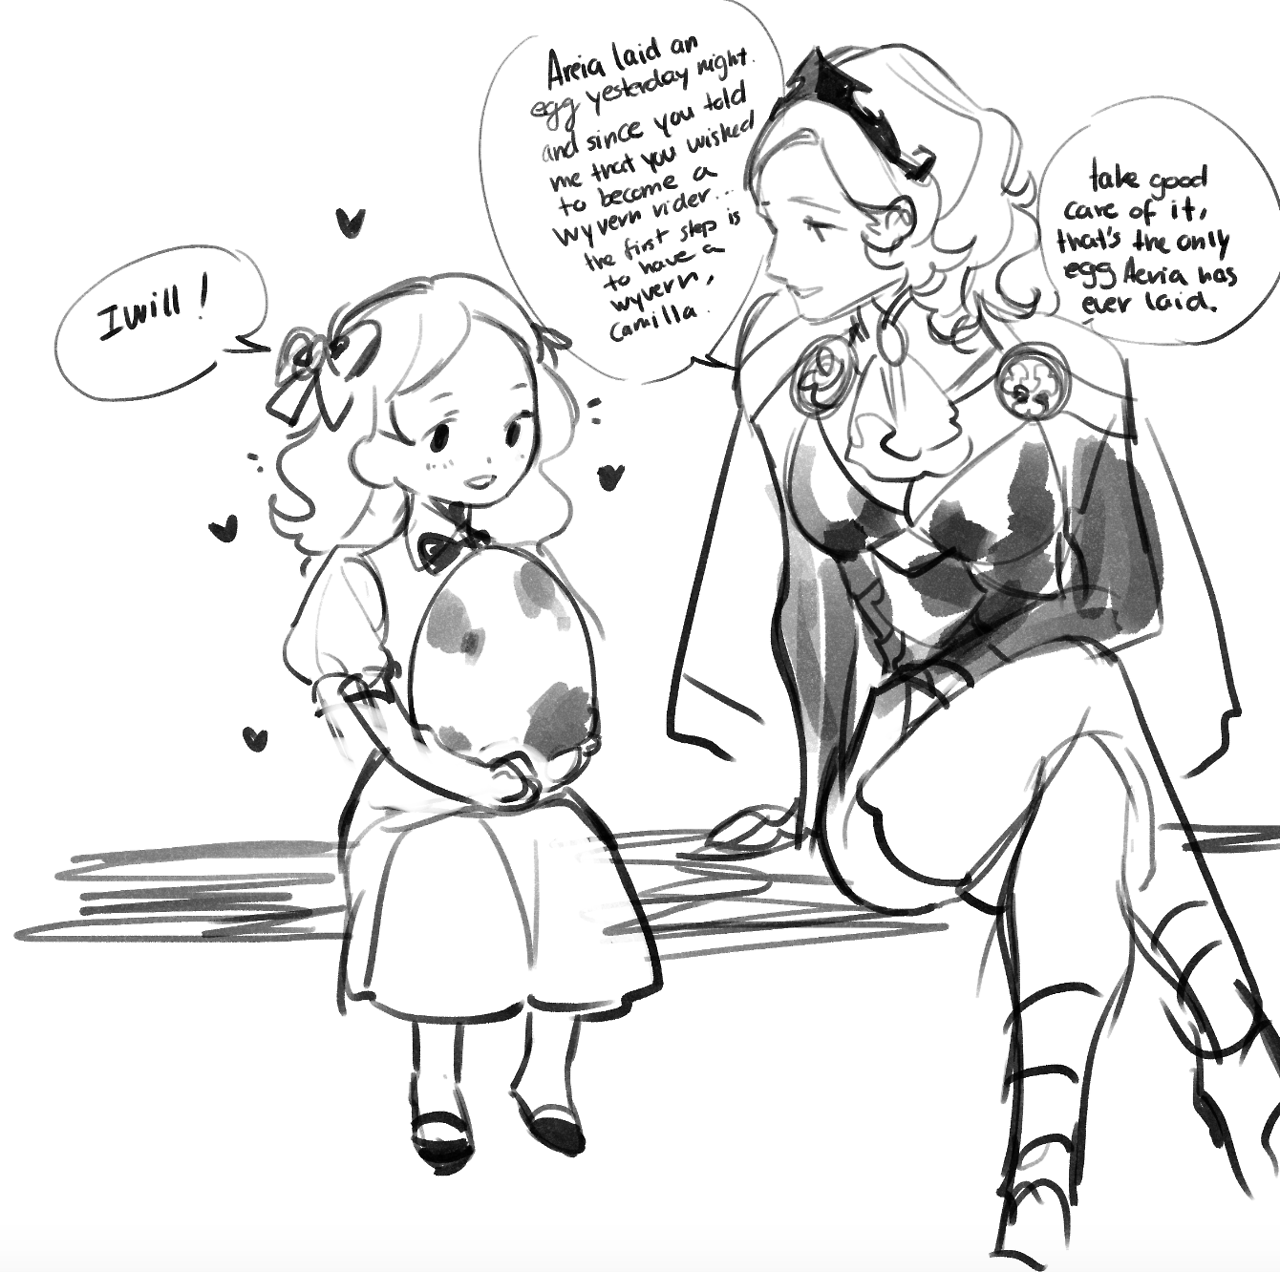 herukas:random sketches of Queen Katerina + baby Xander and smol Camilla.